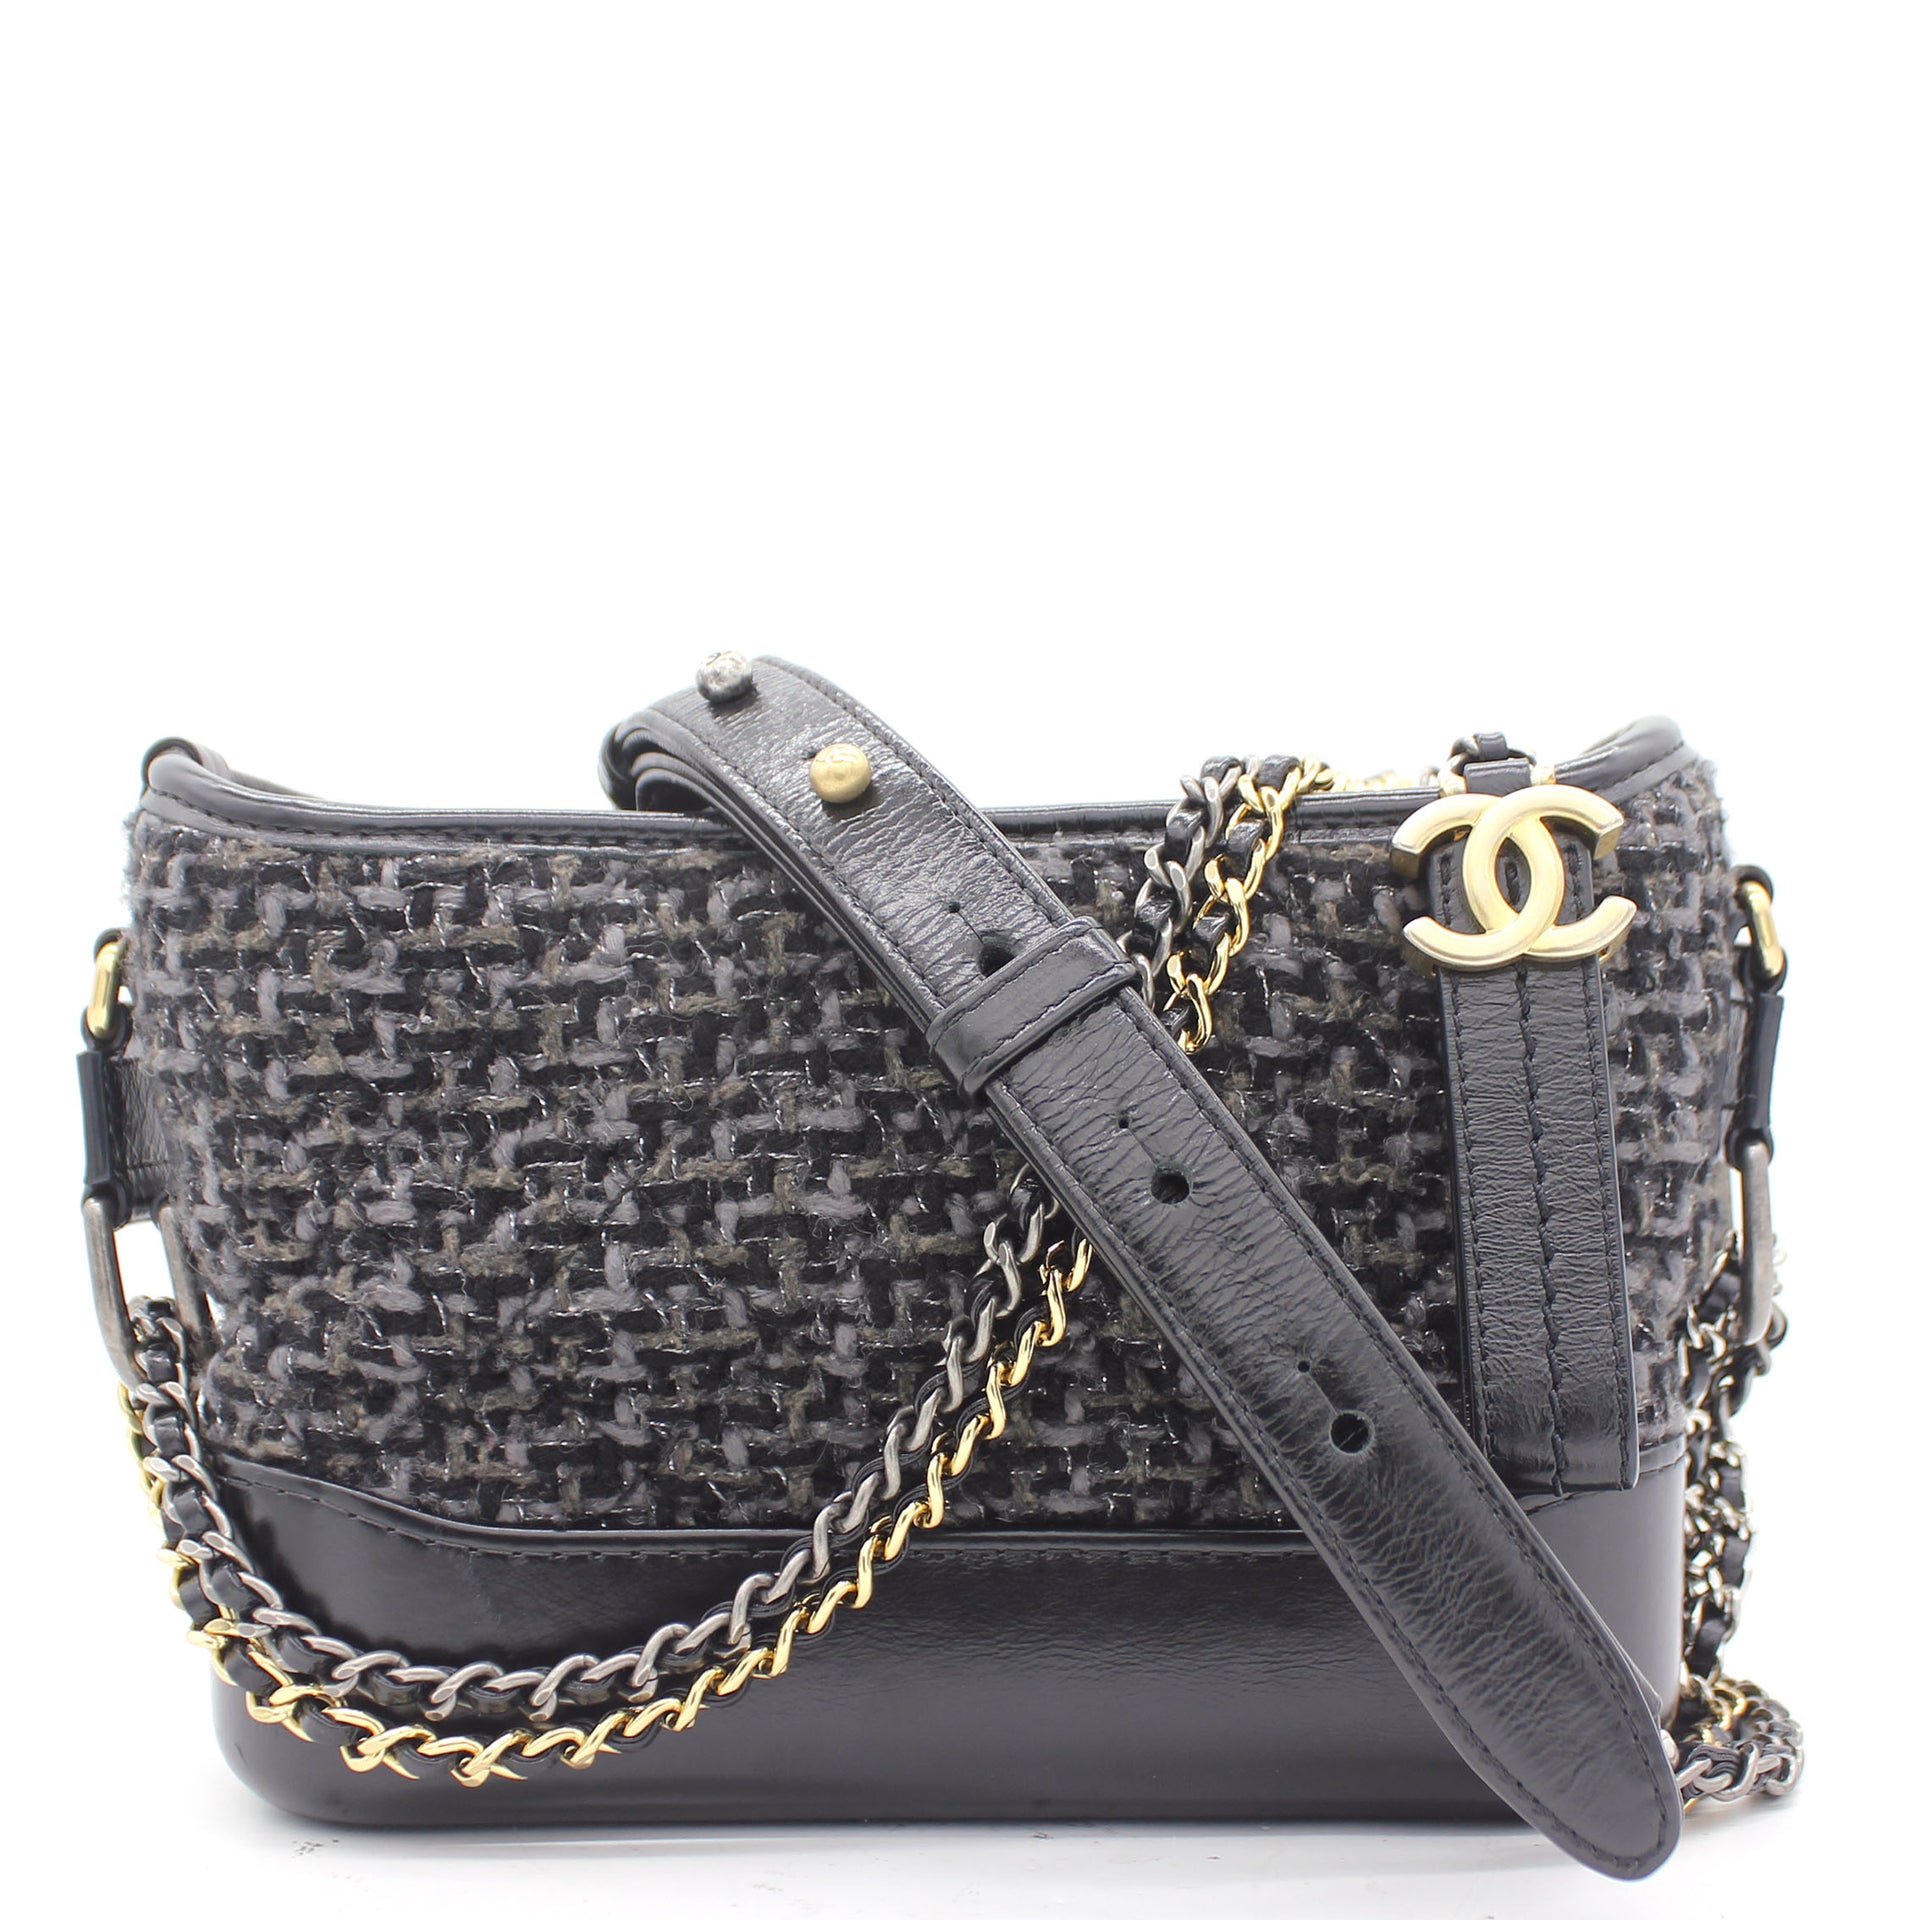 Chanel's Tweed Gabrielle Hobo Bag